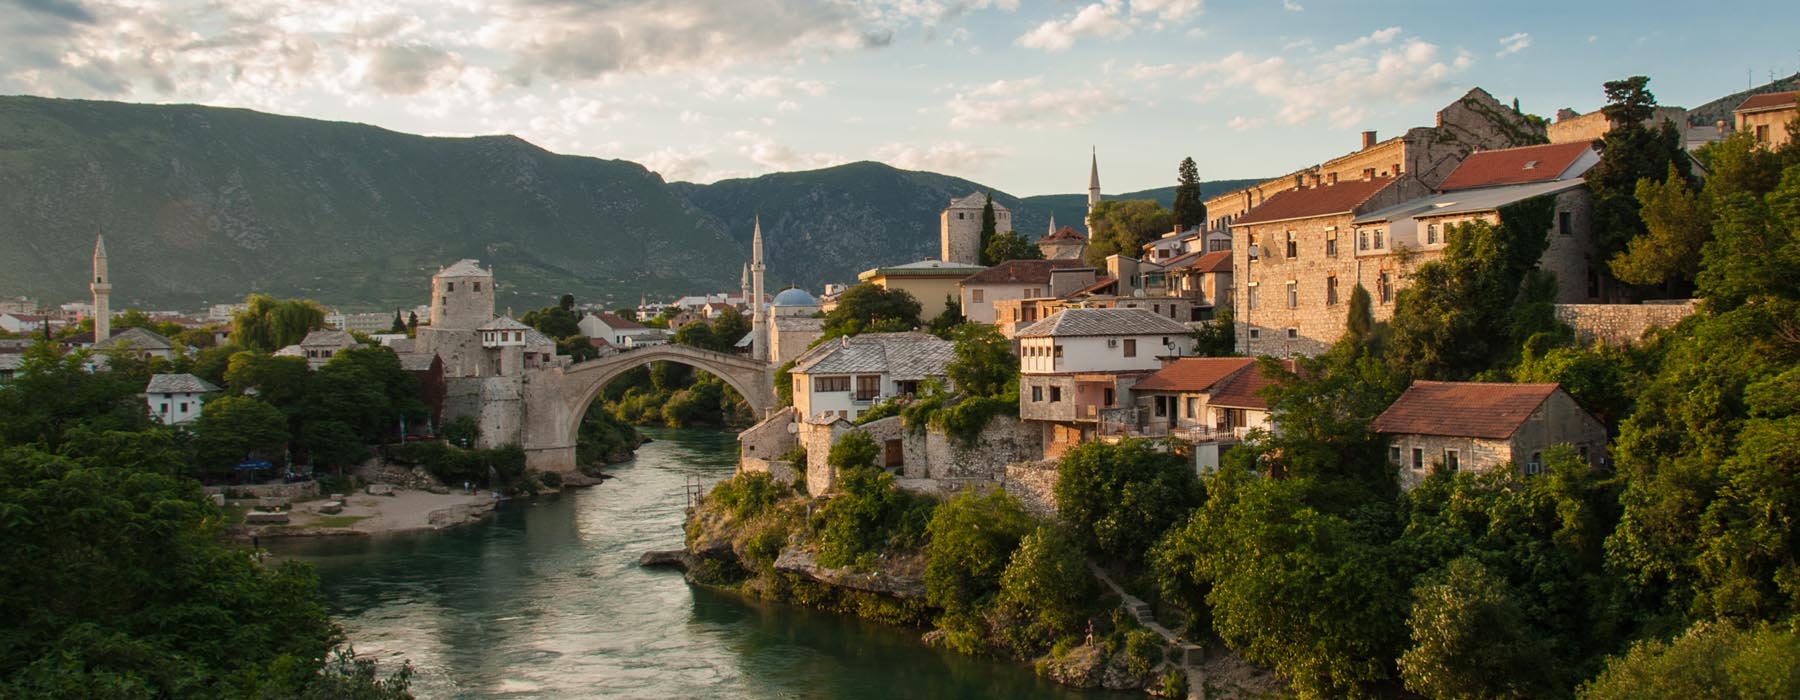 Tour d'Europe Bosnie-Herzégovine